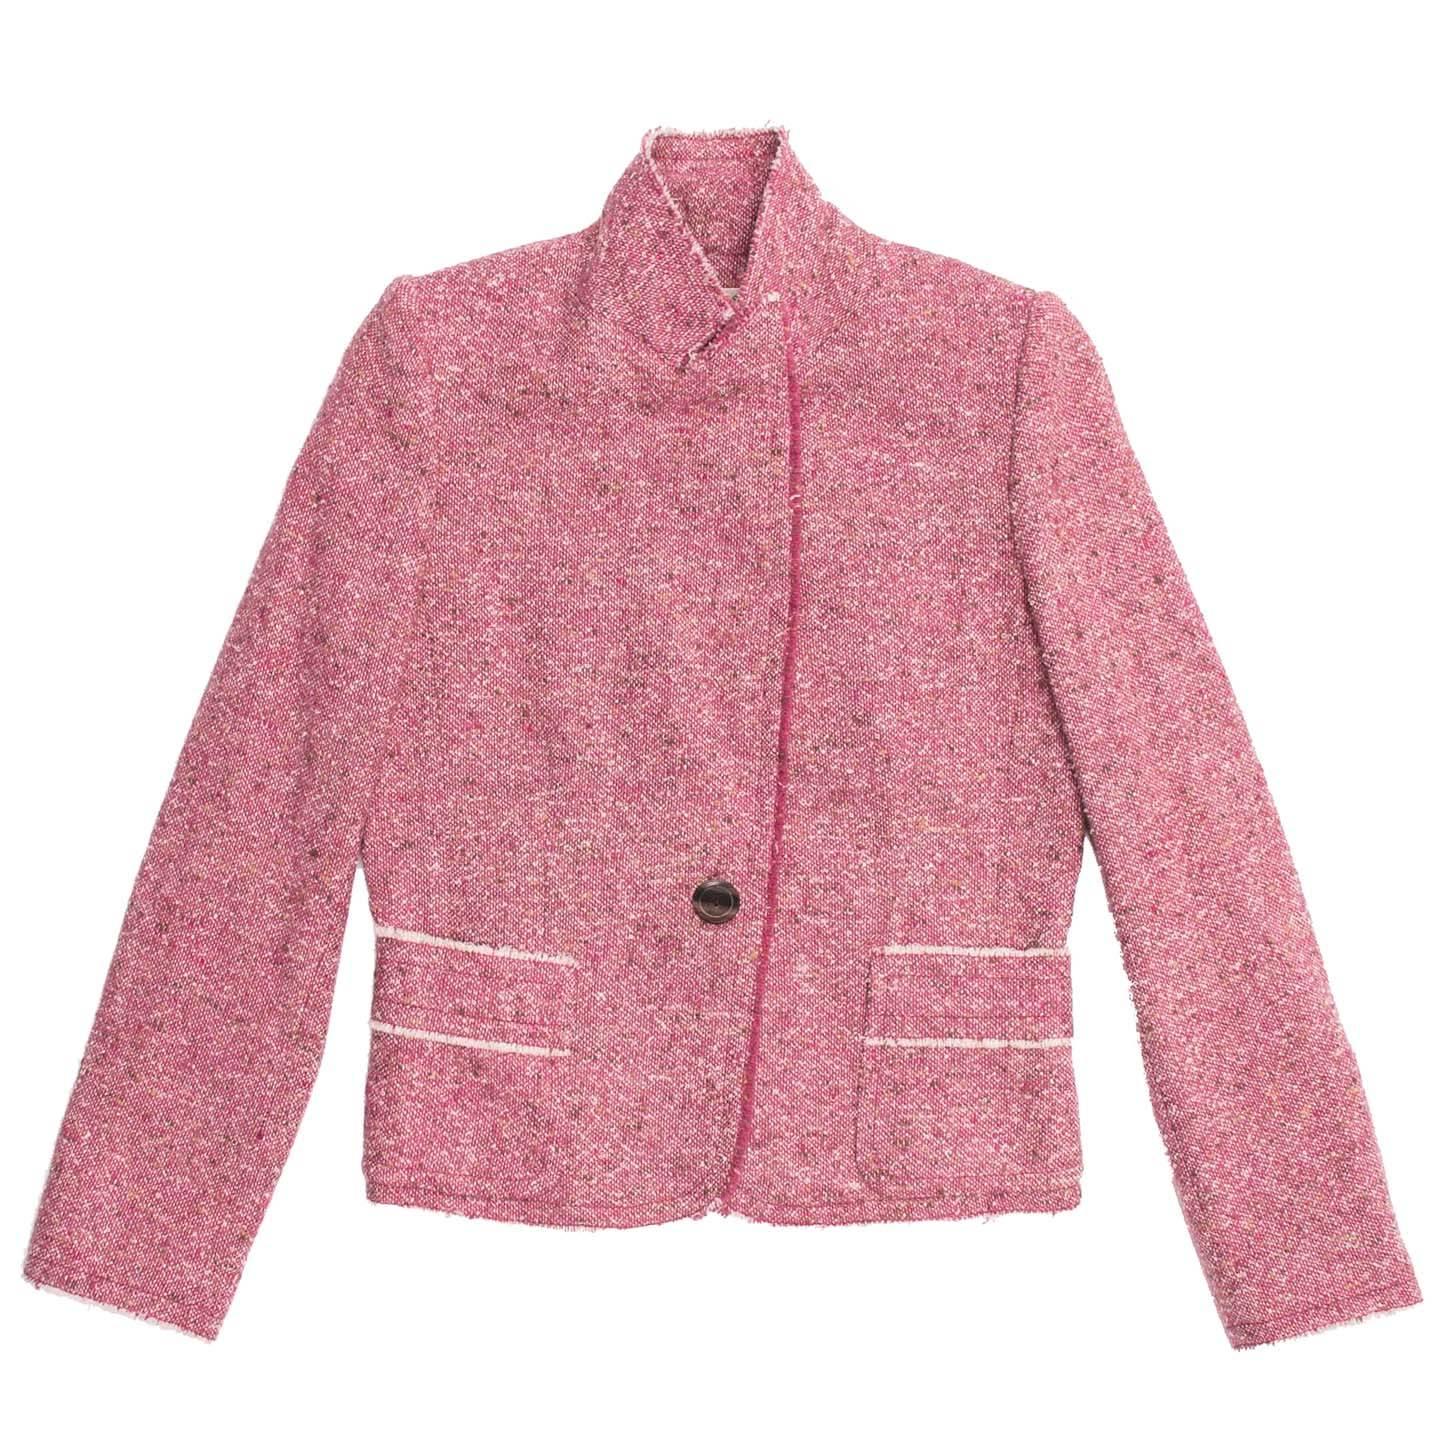 marc jacobs pink jacket